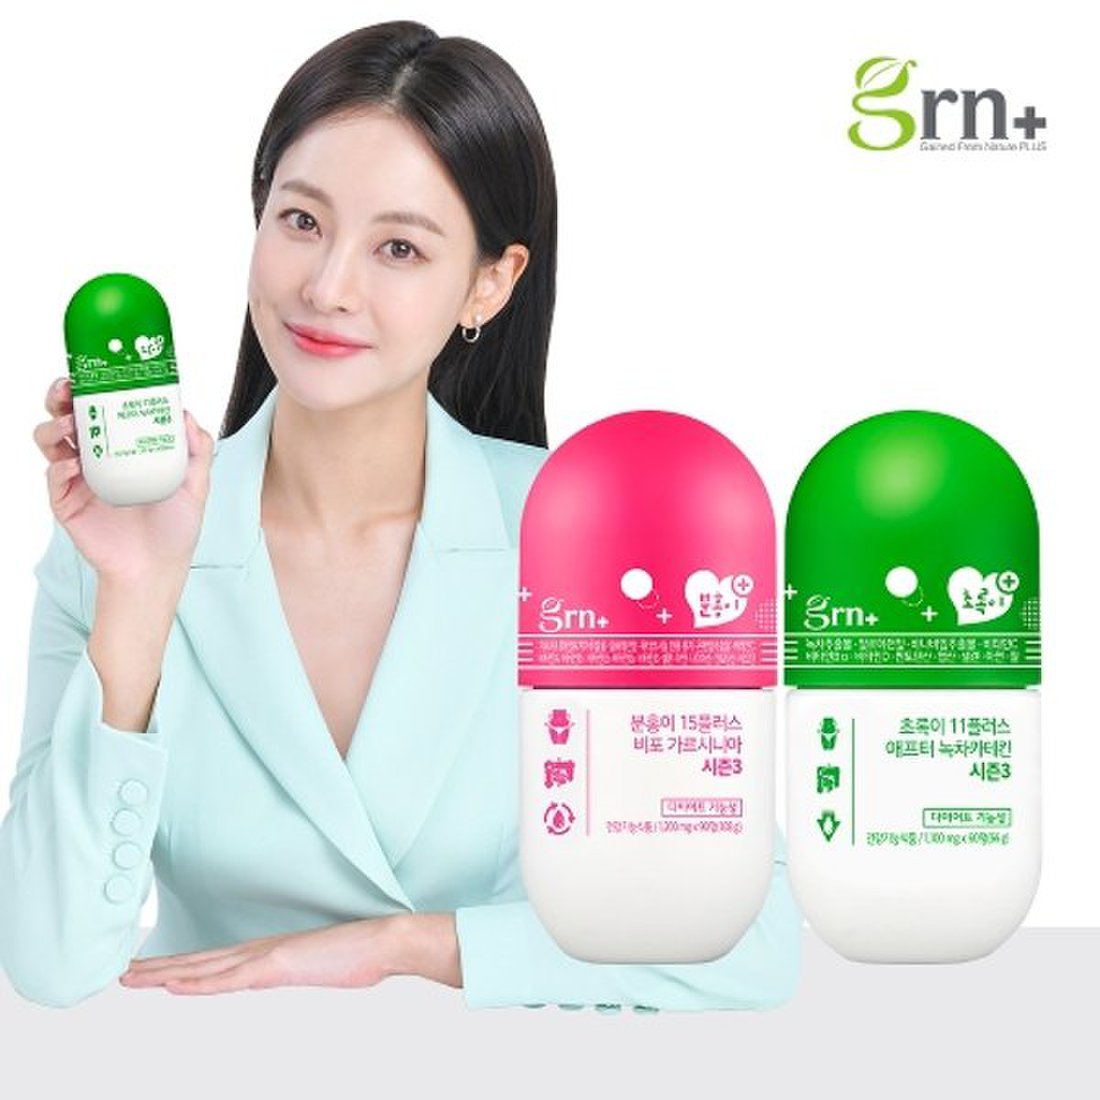 Grn 분홍이+초록이 플러스 시즌3, 신세계적 쇼핑포털 Ssg.Com